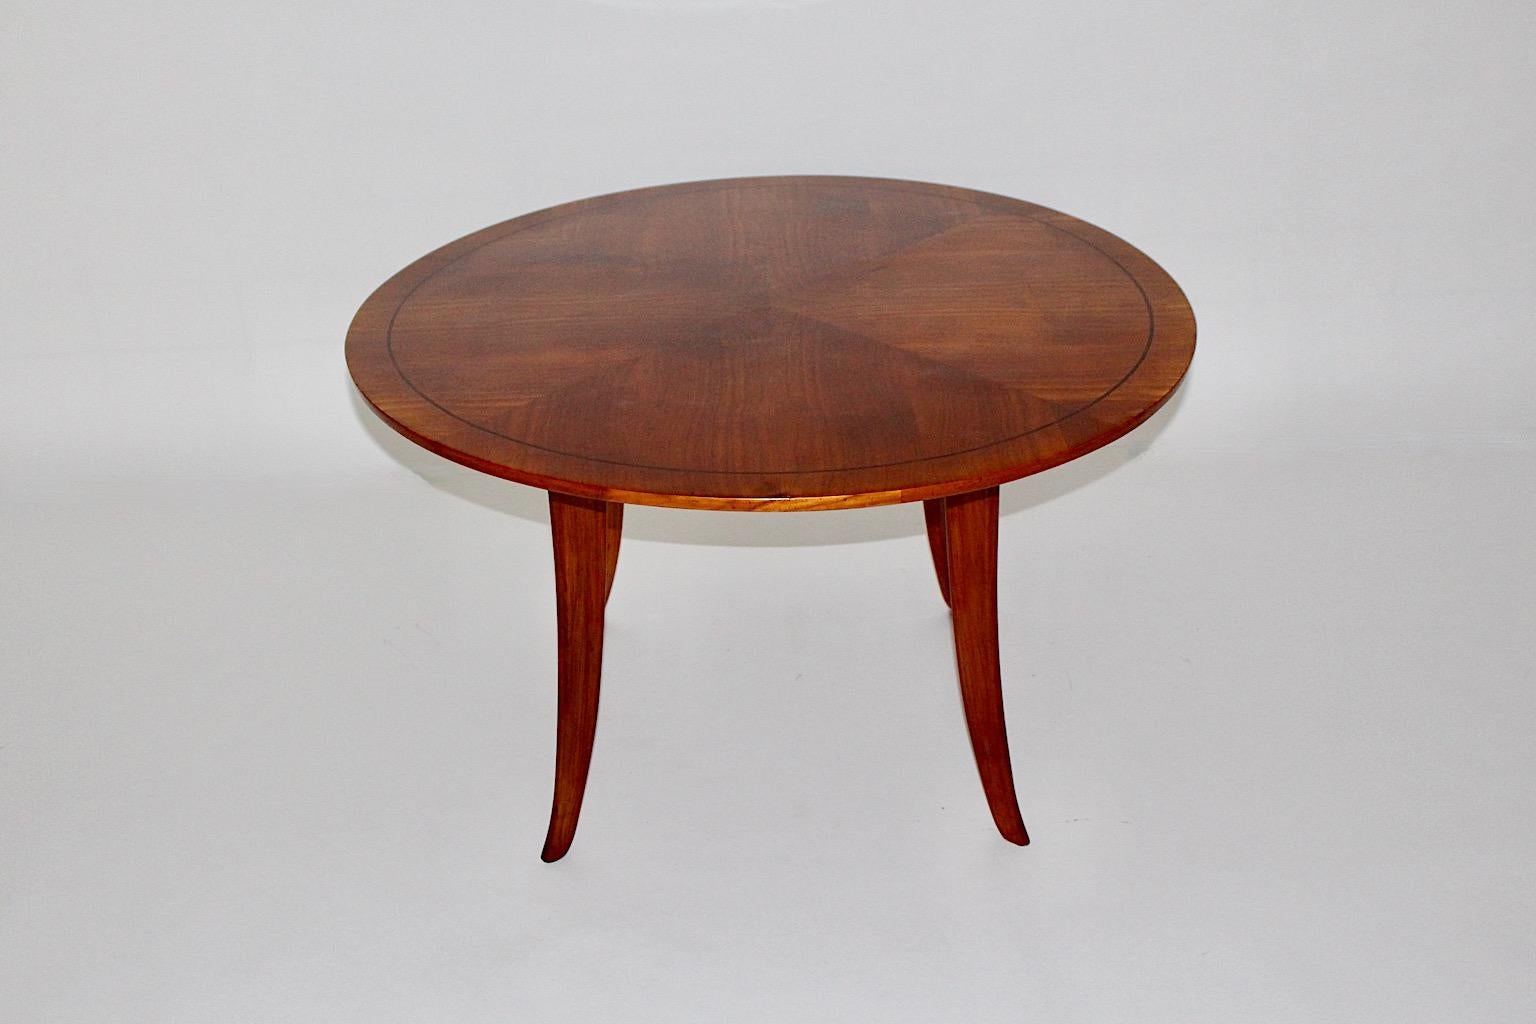 20th Century Art Deco Vintage Circular Coffee Table Cherry Wood Josef Frank circa 1932 Vienna For Sale